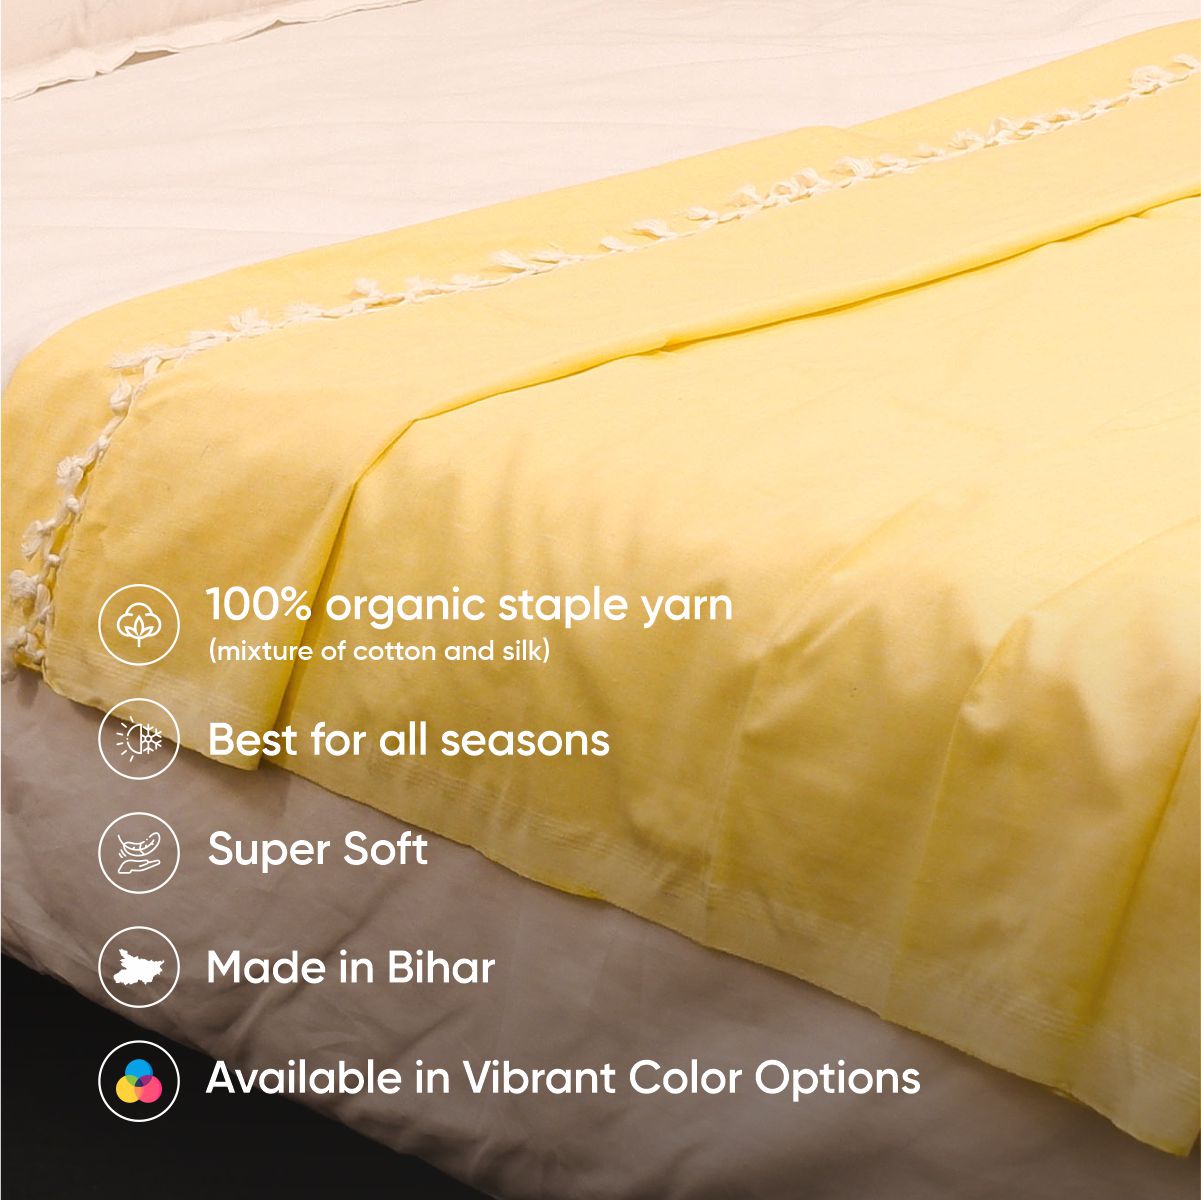 Combo Bhagalpuri Chadar (Pale Yellow, Blue & Yellow) | AC Comforter (All Season) Skin Soft